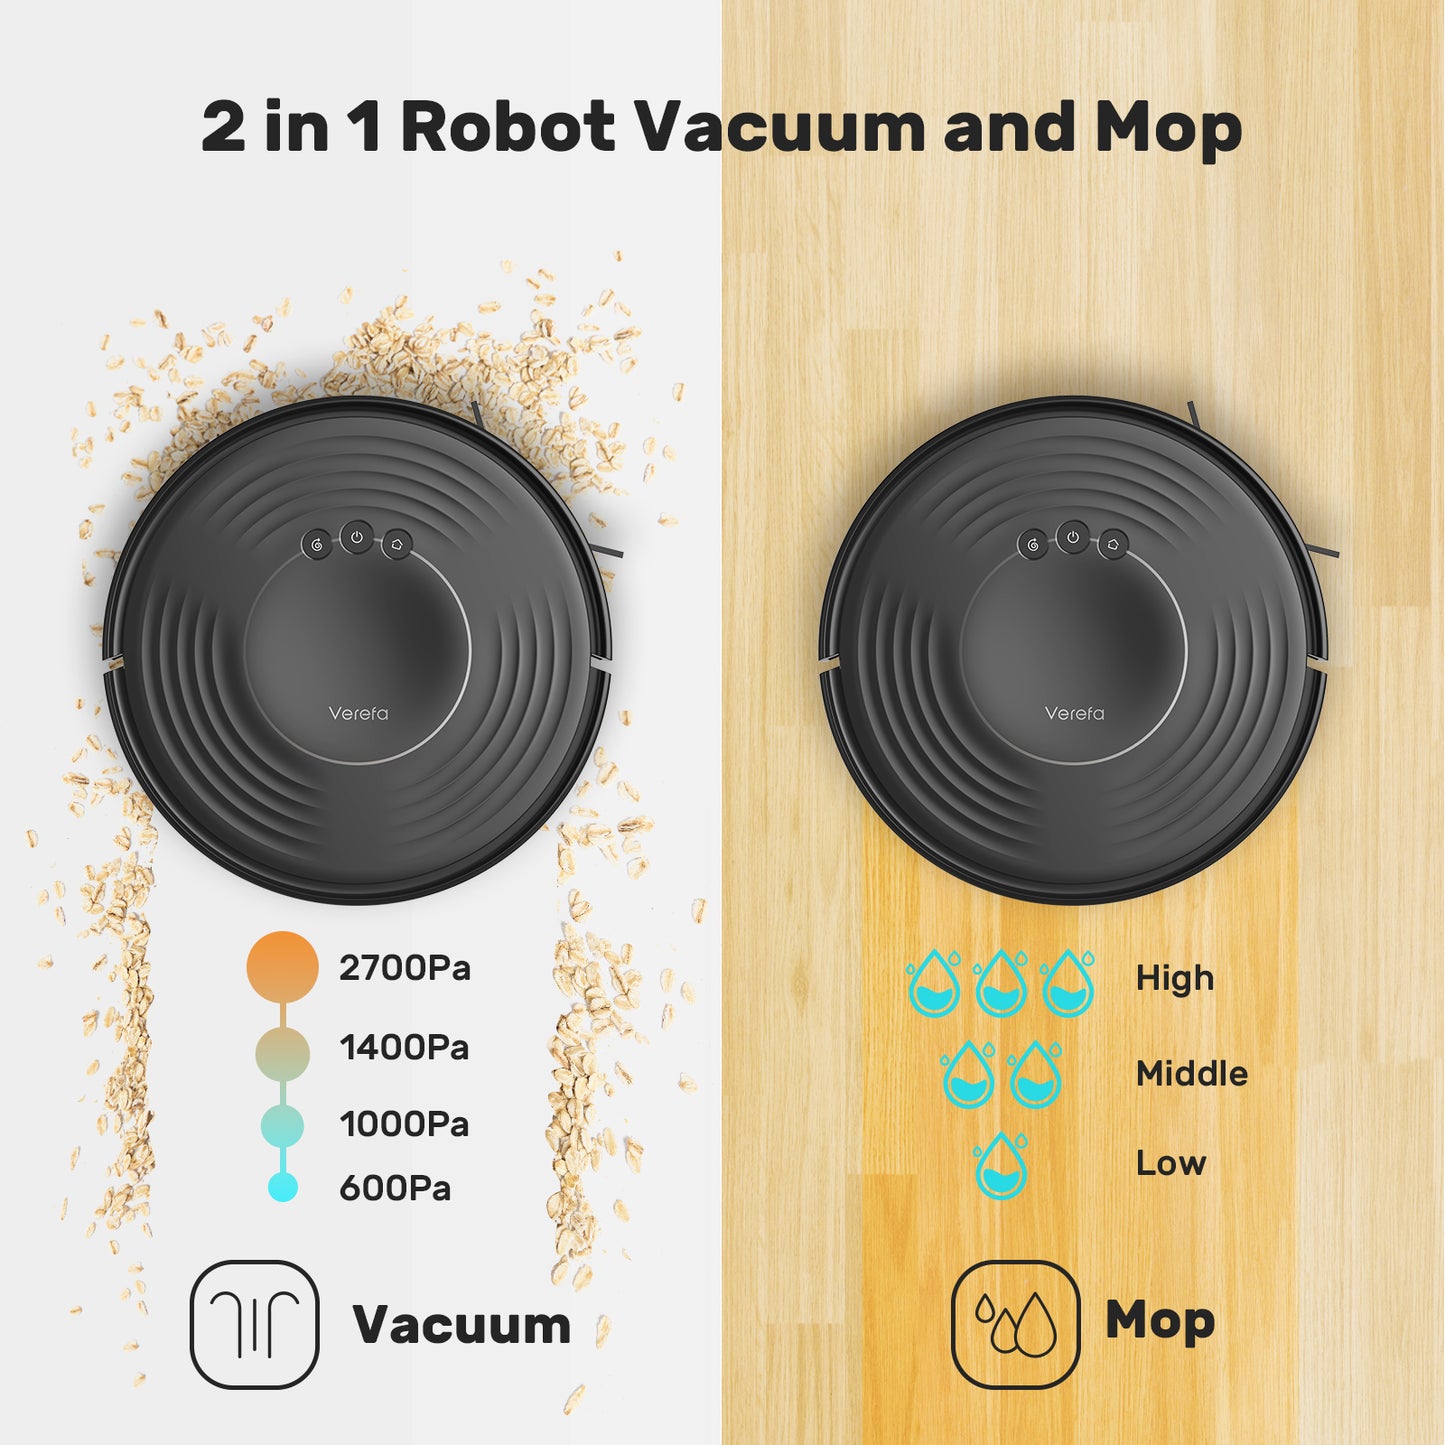 Verefa V60M Robot Vacuum And Mop